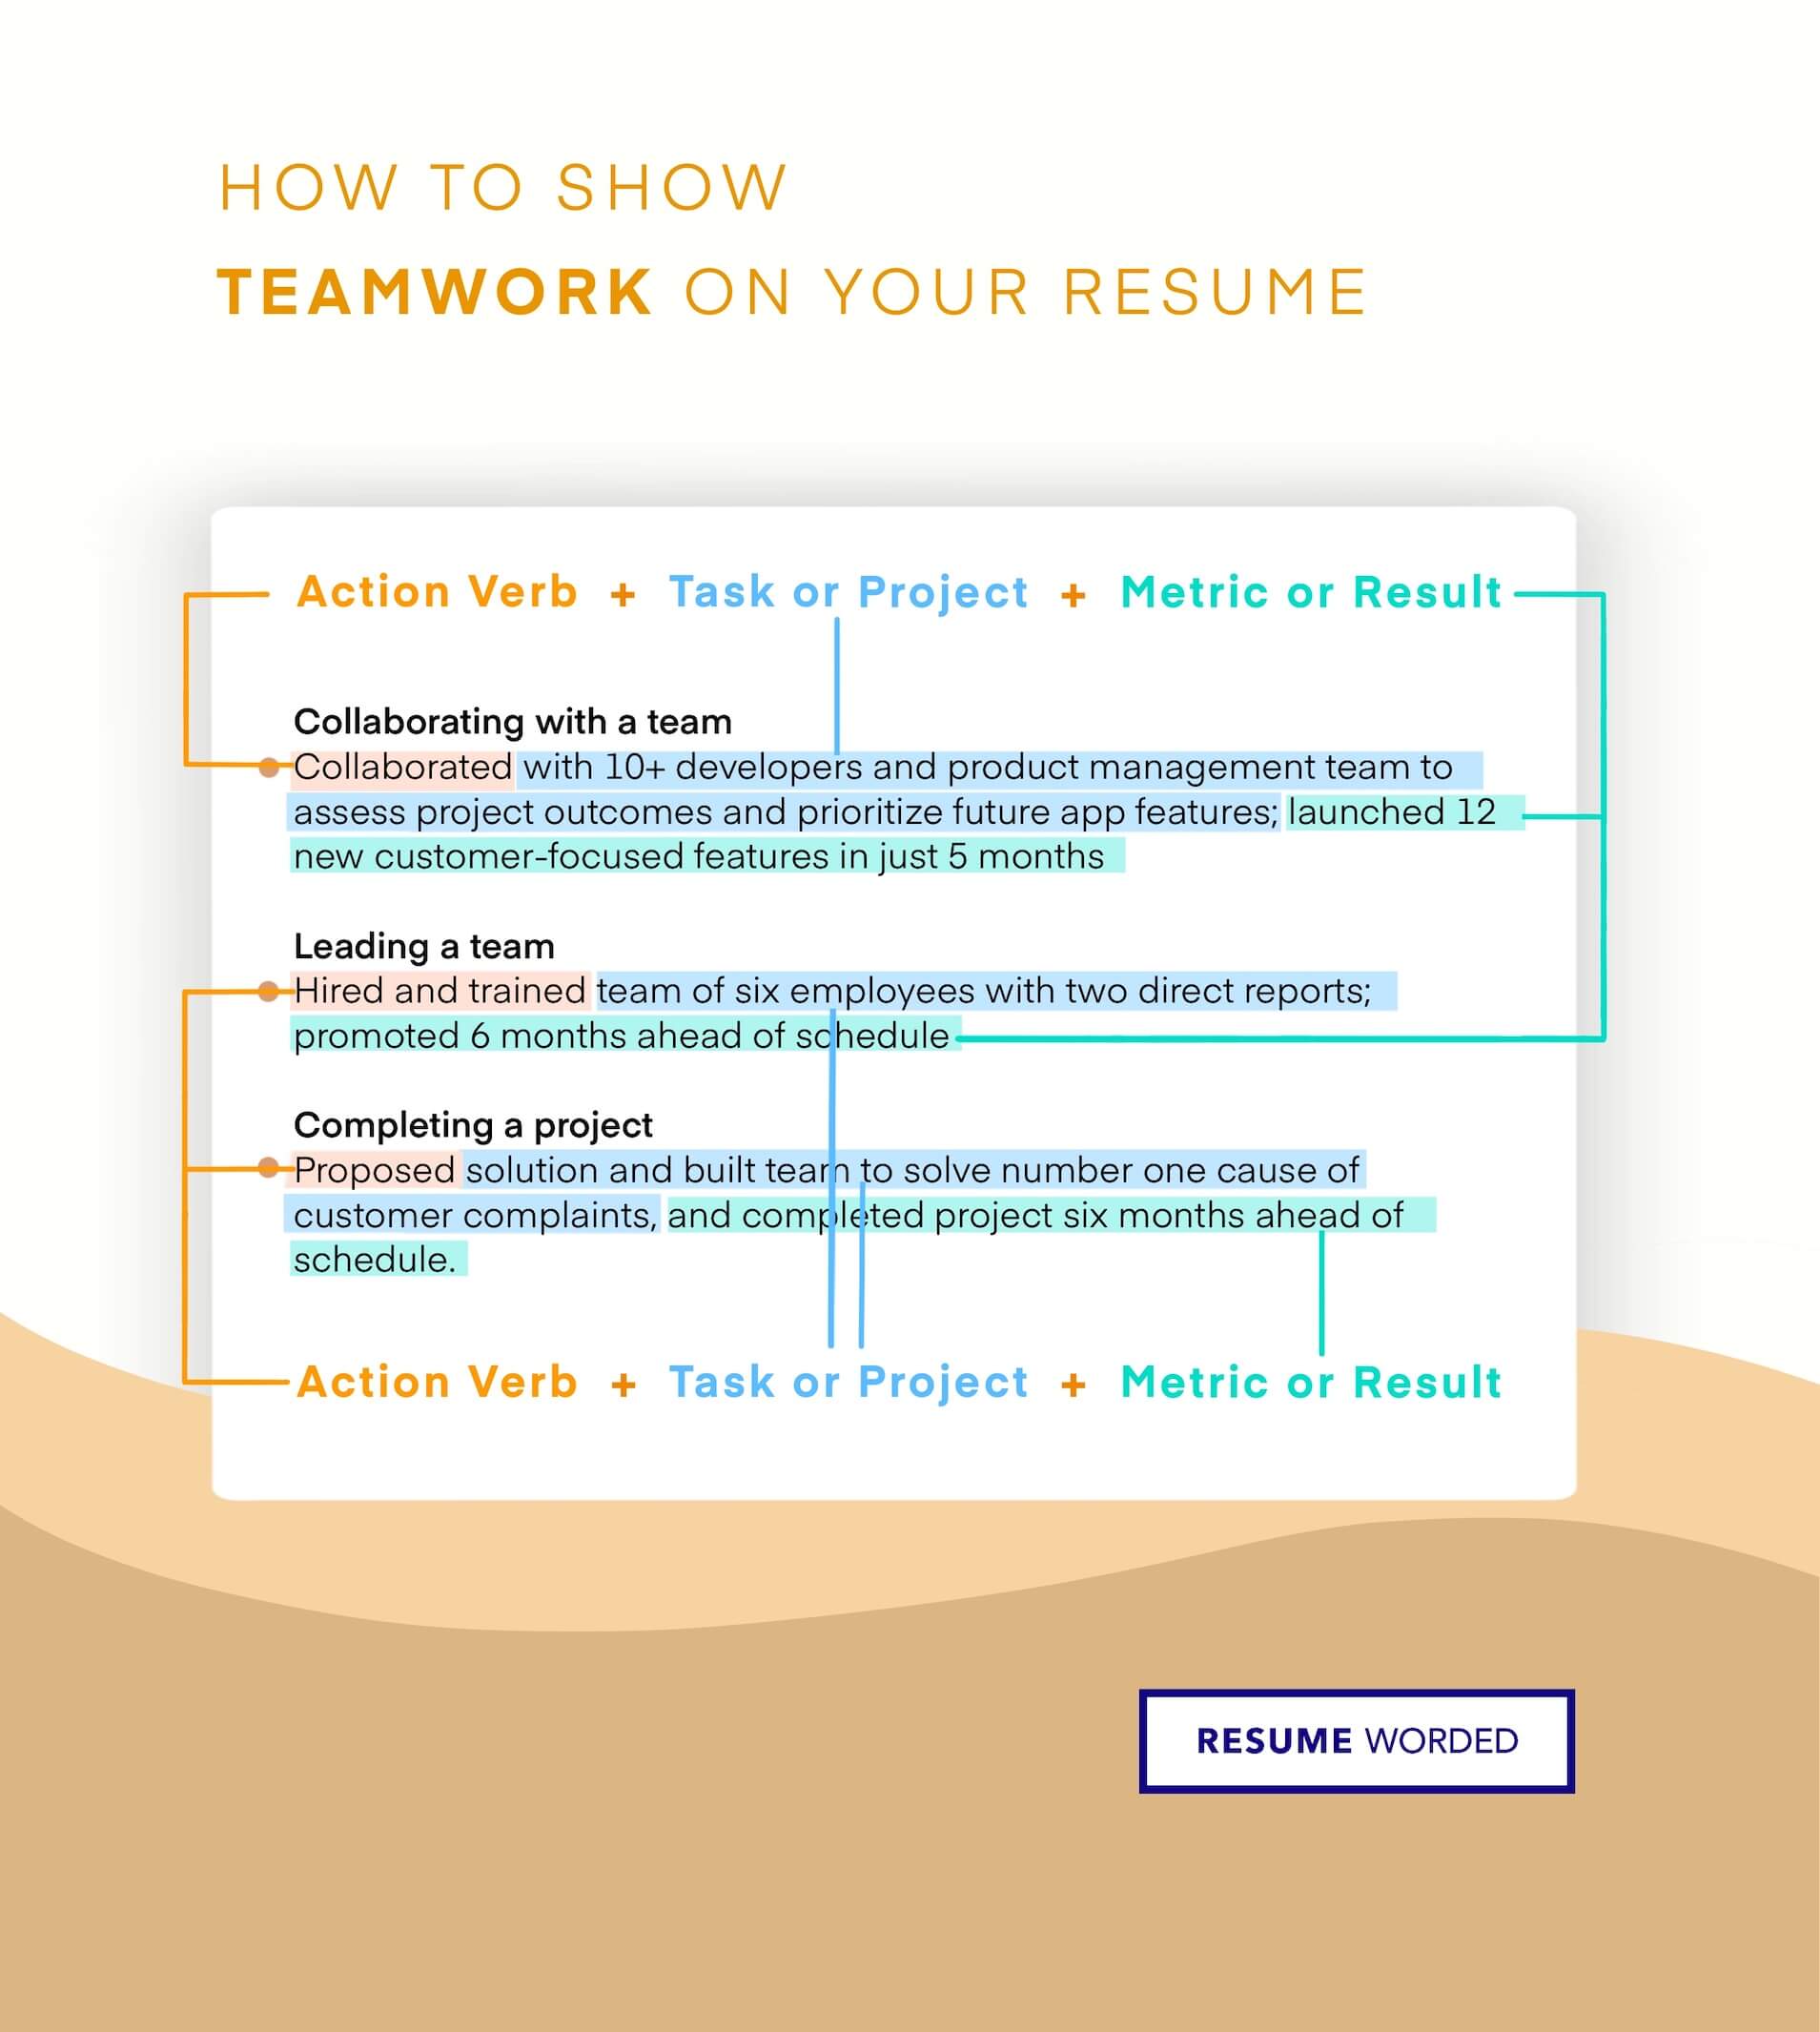 Use action verbs that emphasize your team skills. - Digital Marketing Intern Resume